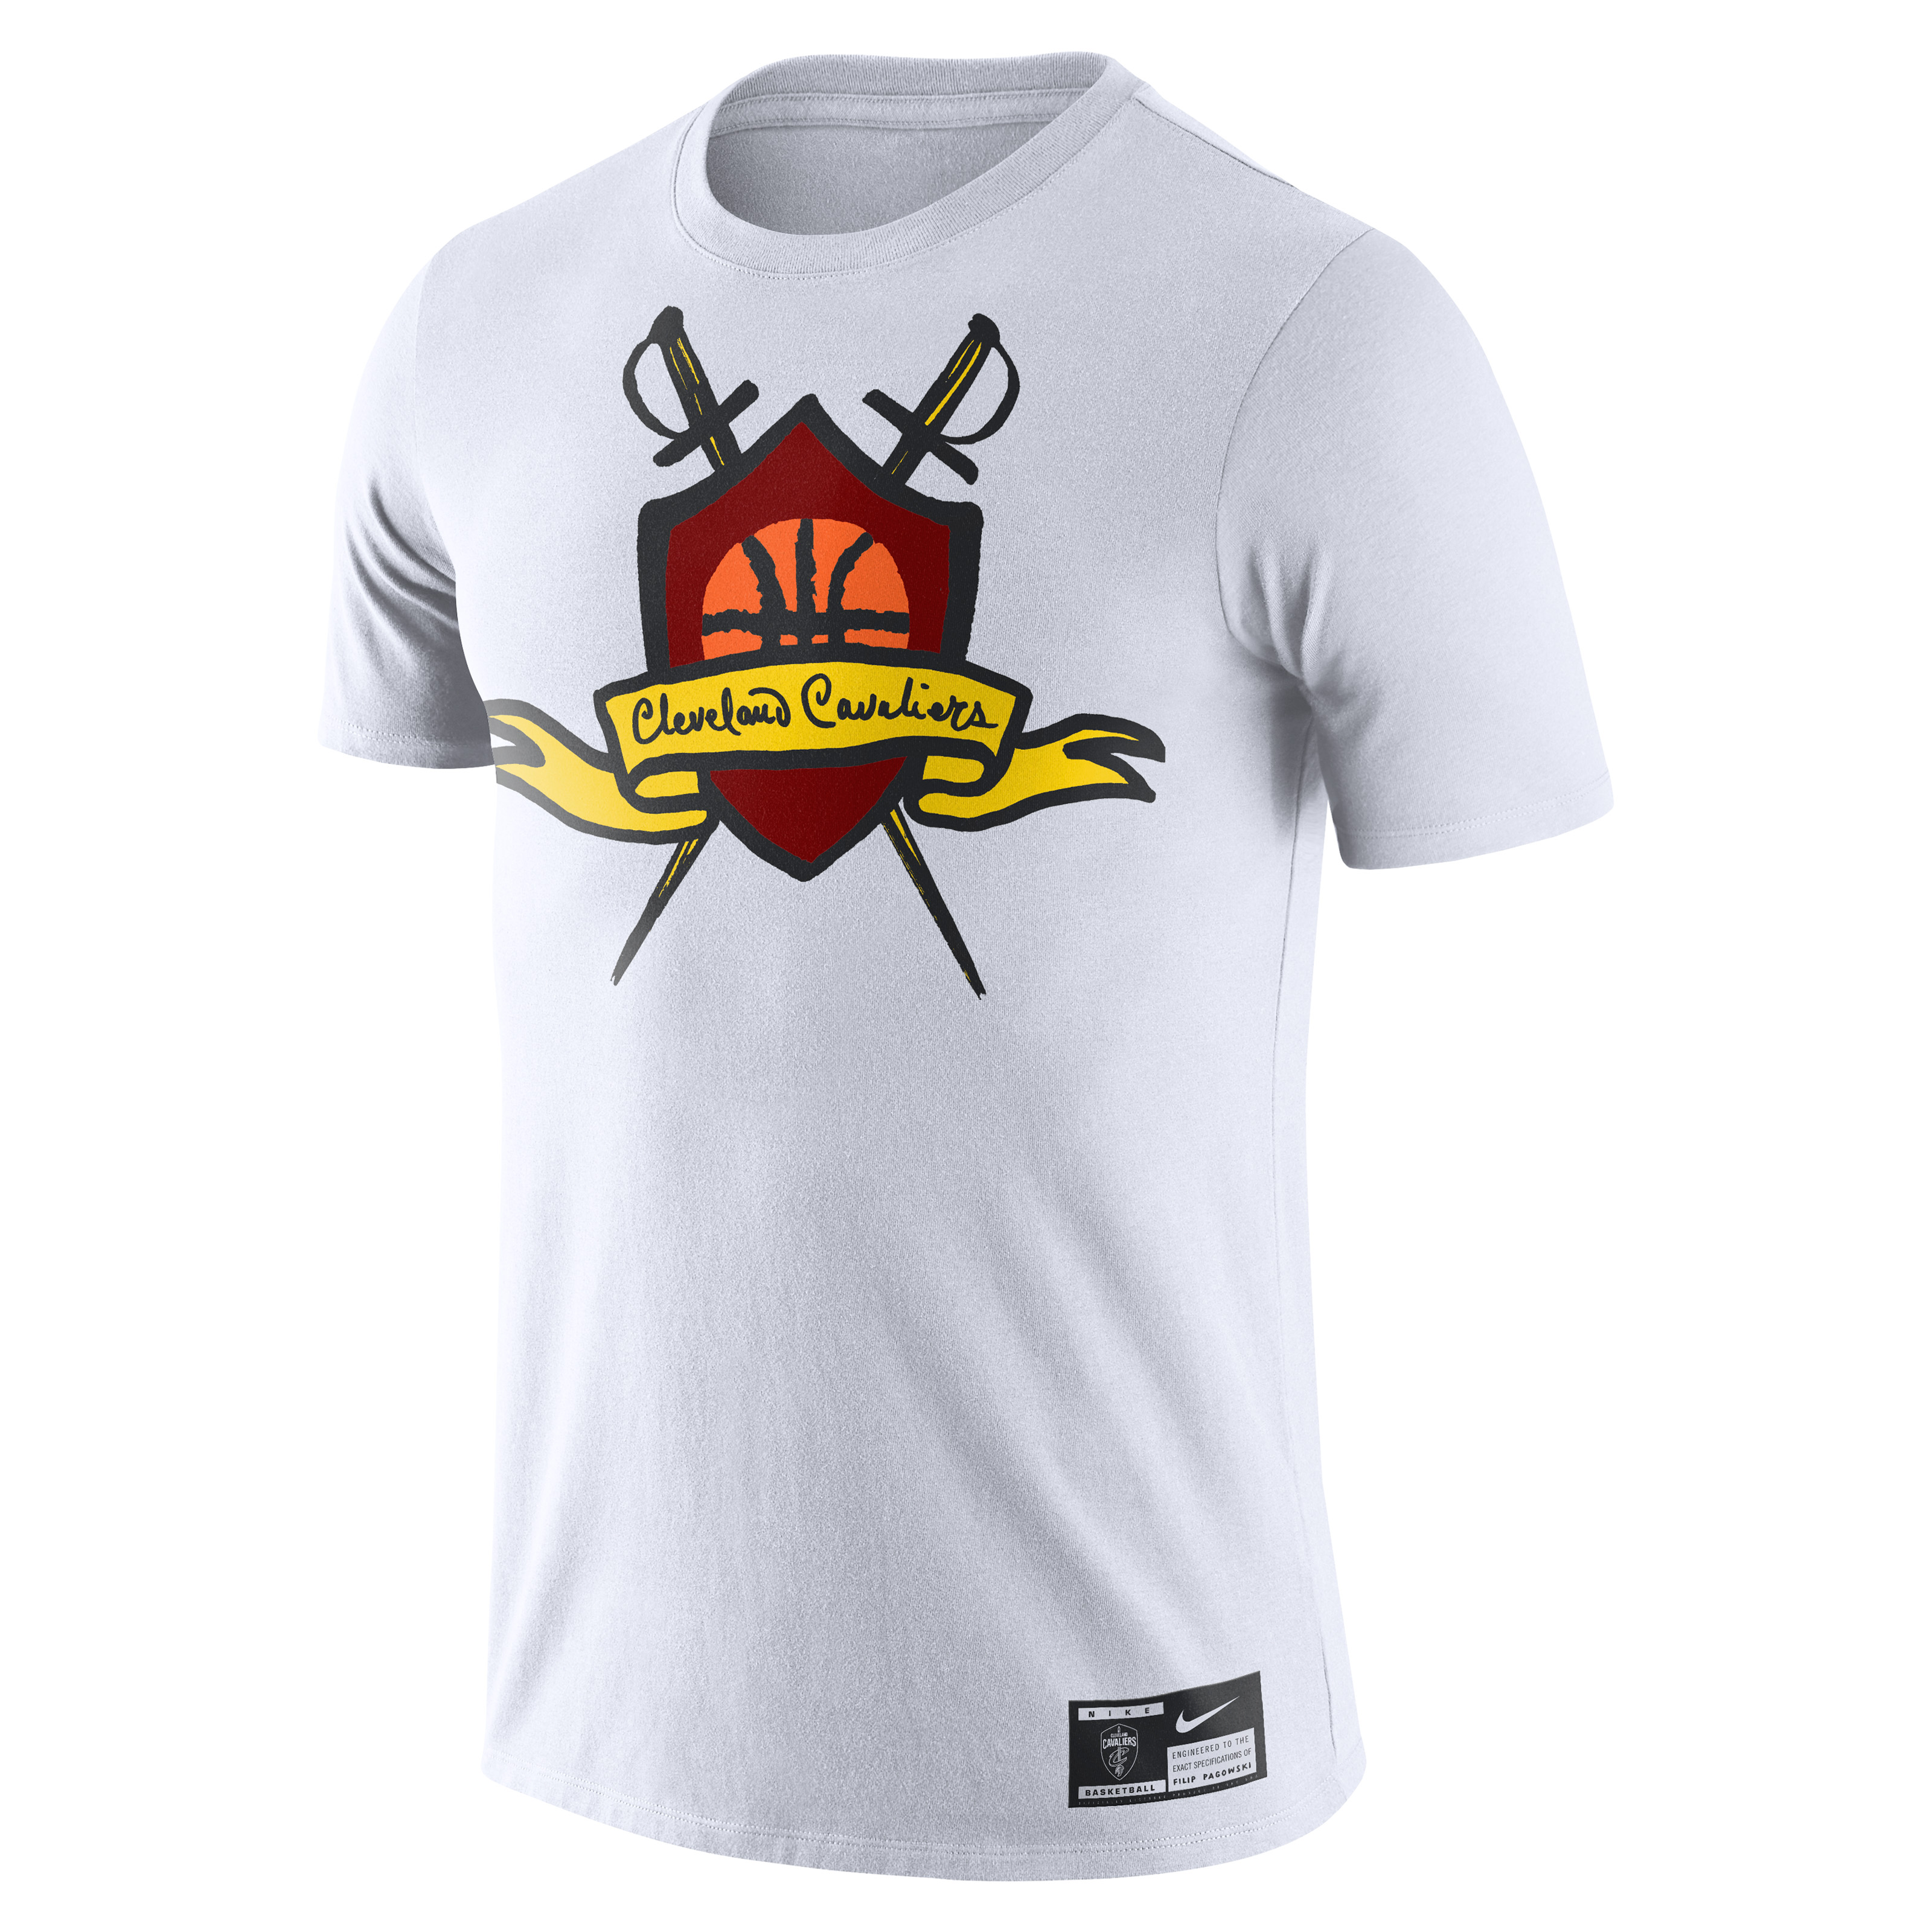 Filip Pagowski Nike T shirt &#x27;Cleveland Cavaliers&#x27;